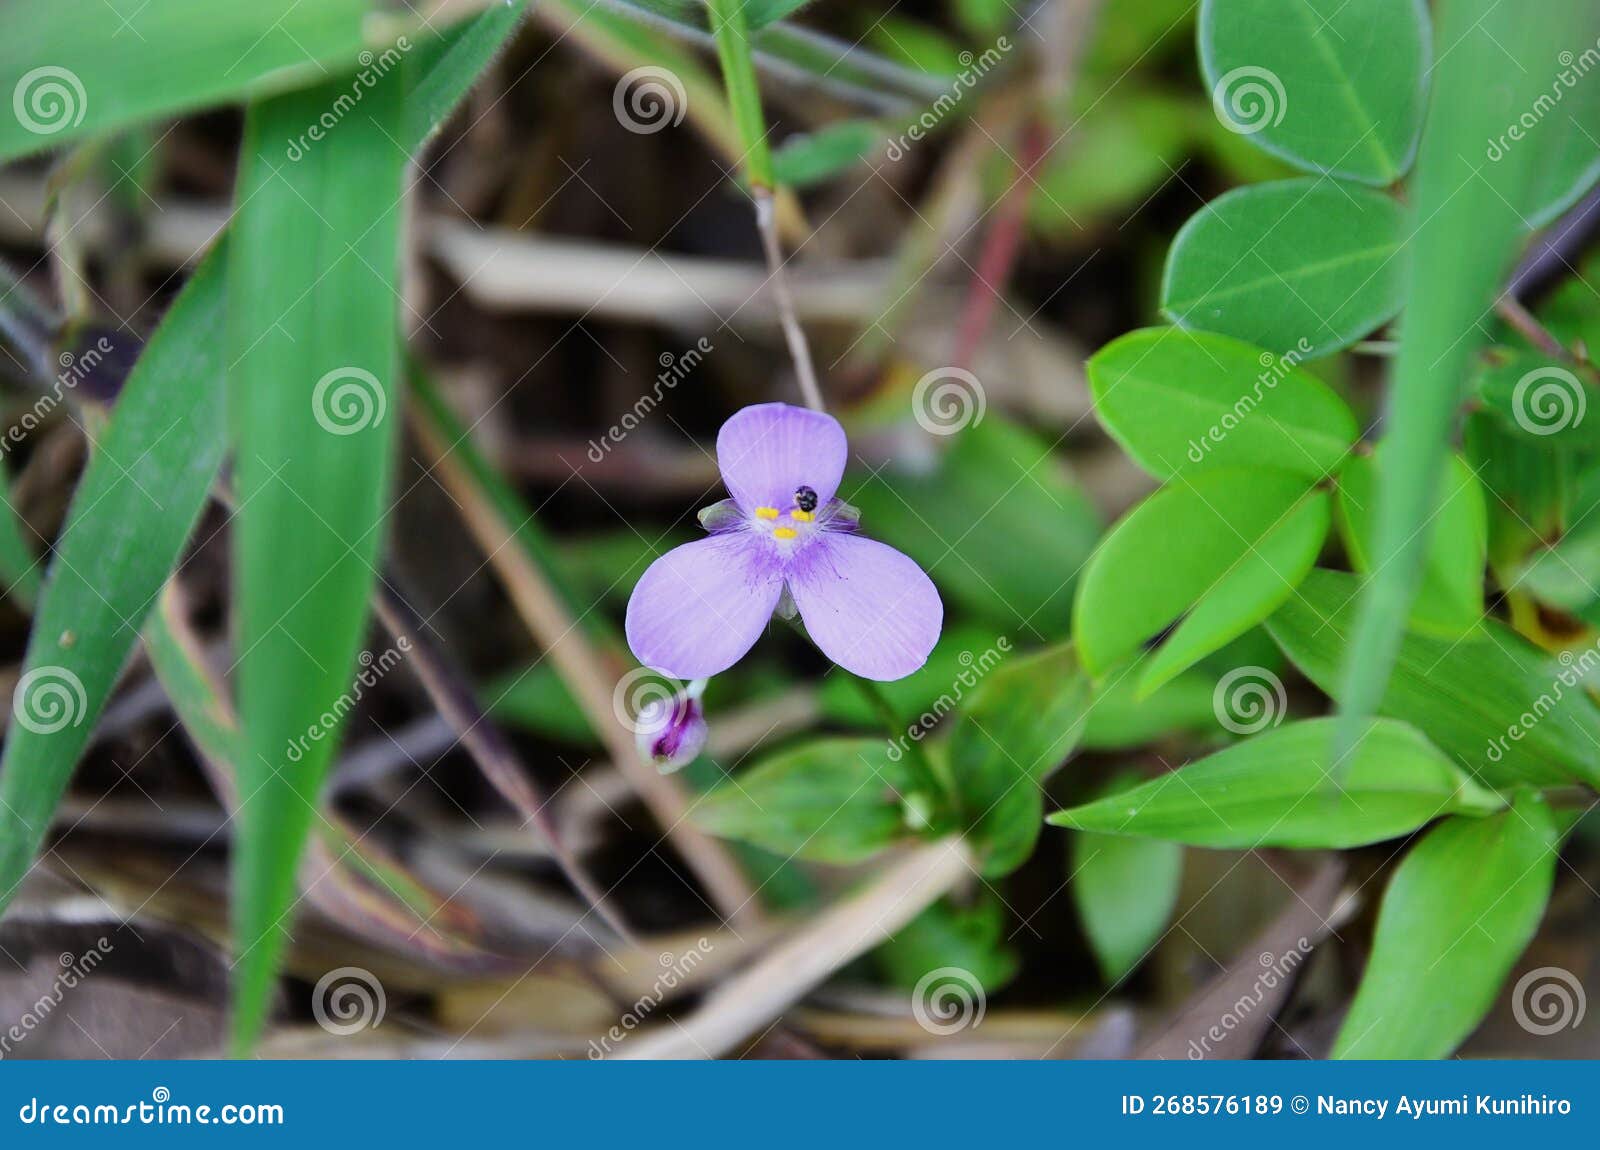 the delicate flower of blooming diuretic trypogandra